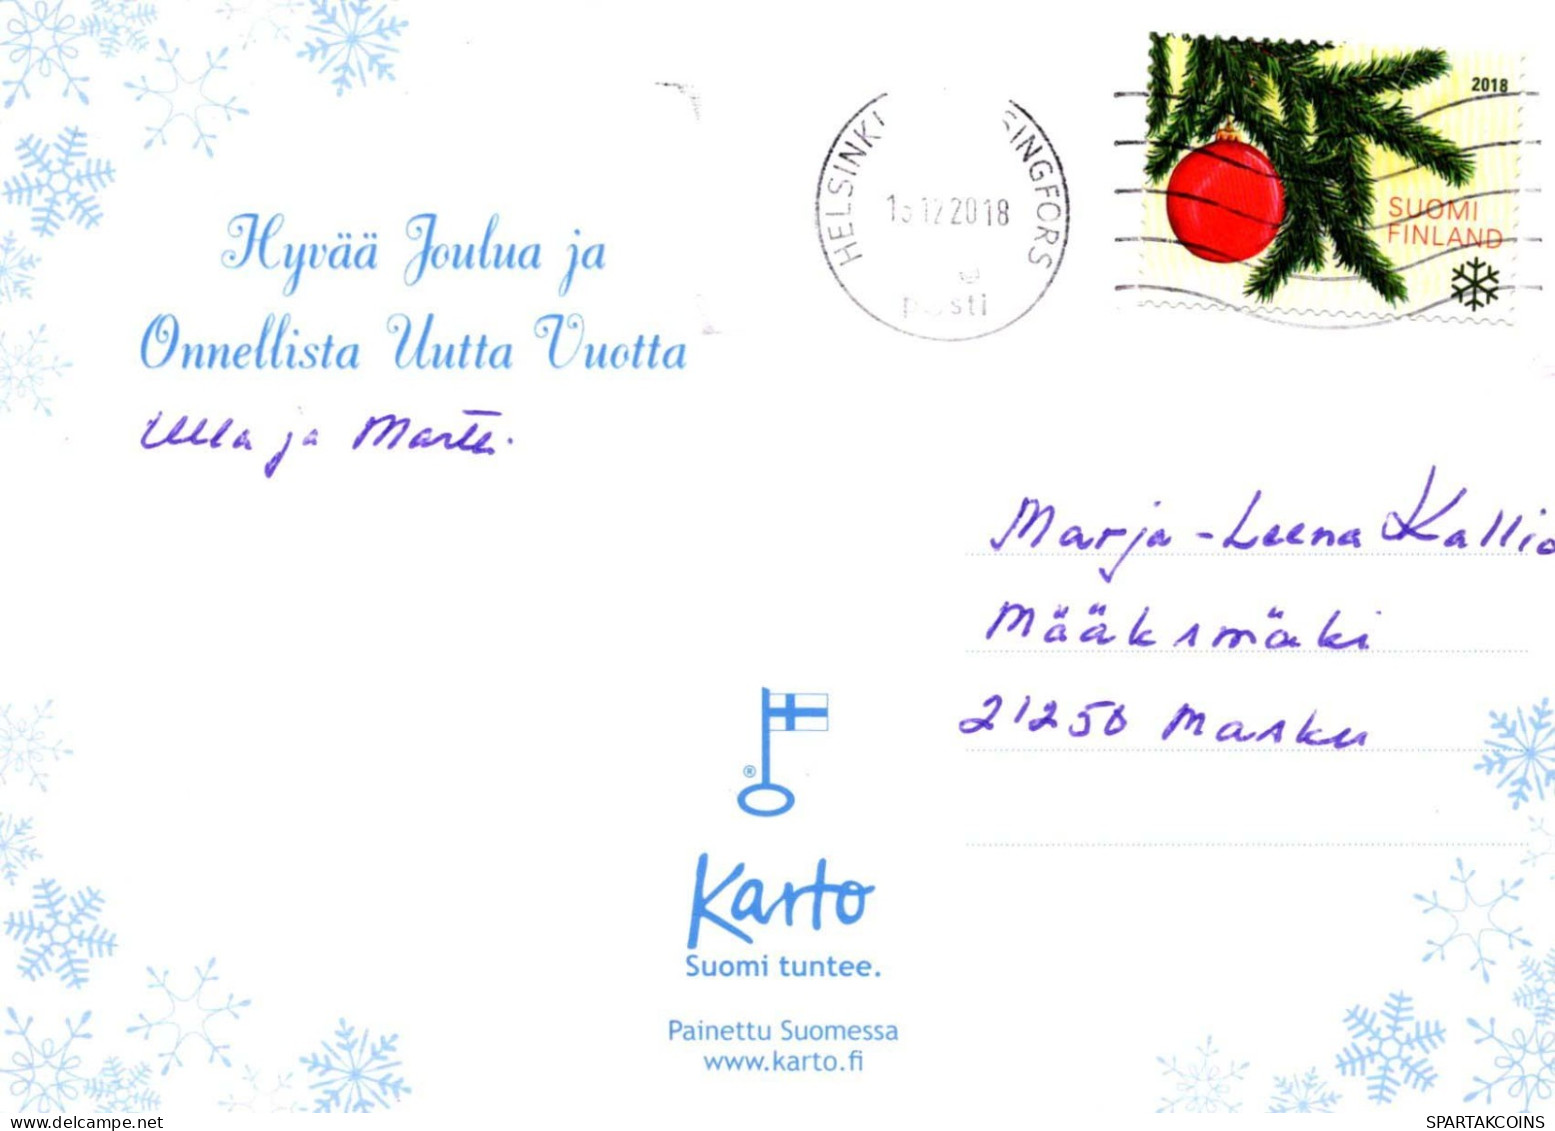 Feliz Año Navidad Vintage Tarjeta Postal CPSM #PBN086.A - New Year